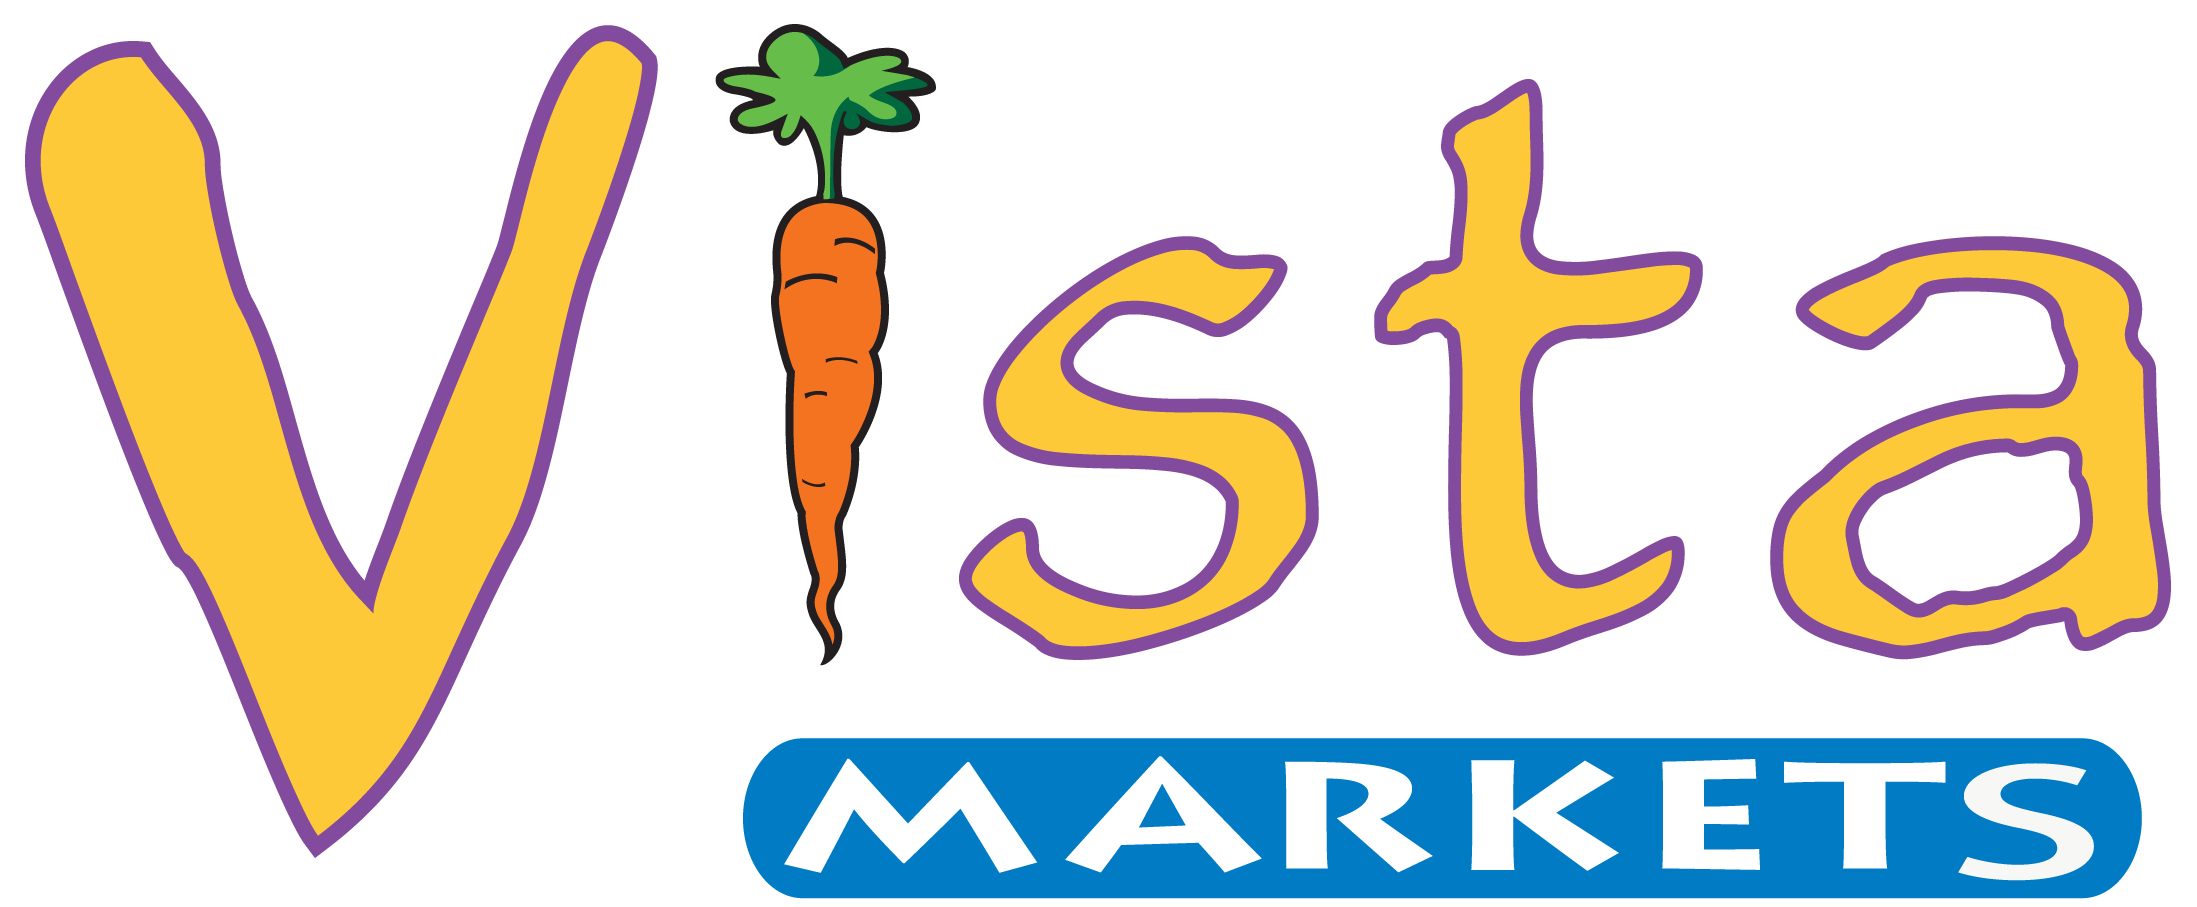 grocery clipart mini mart